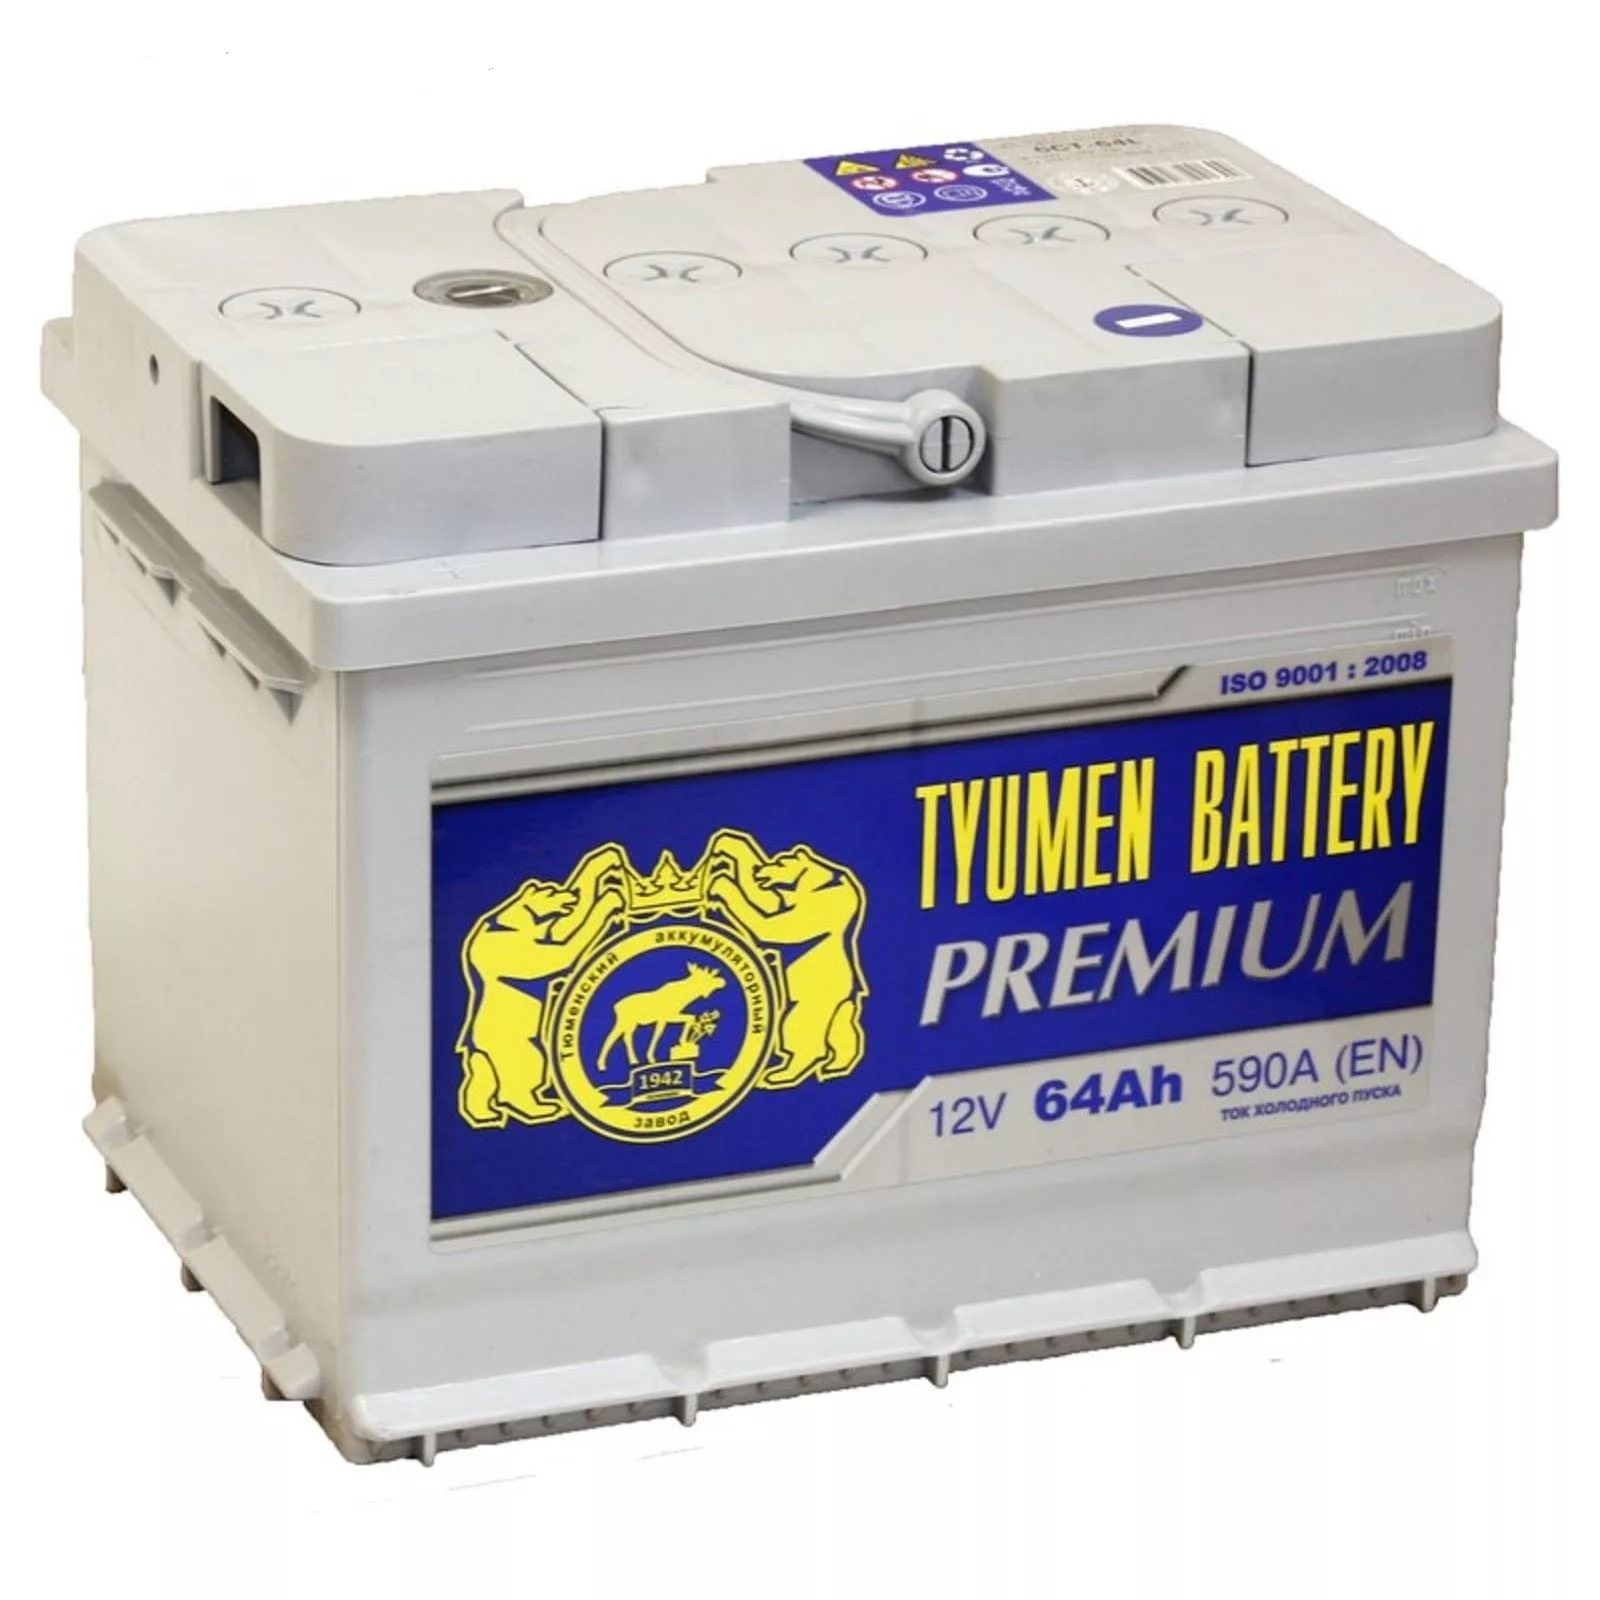 Battery 60. Аккумулятор автомобильный Tyumen Battery Premium 60. Аккумулятор Tyumen Battery 64 Ач. Тюменский аккумулятор 64ач премиум. Аккумулятор Tyumen Battery 60ah.